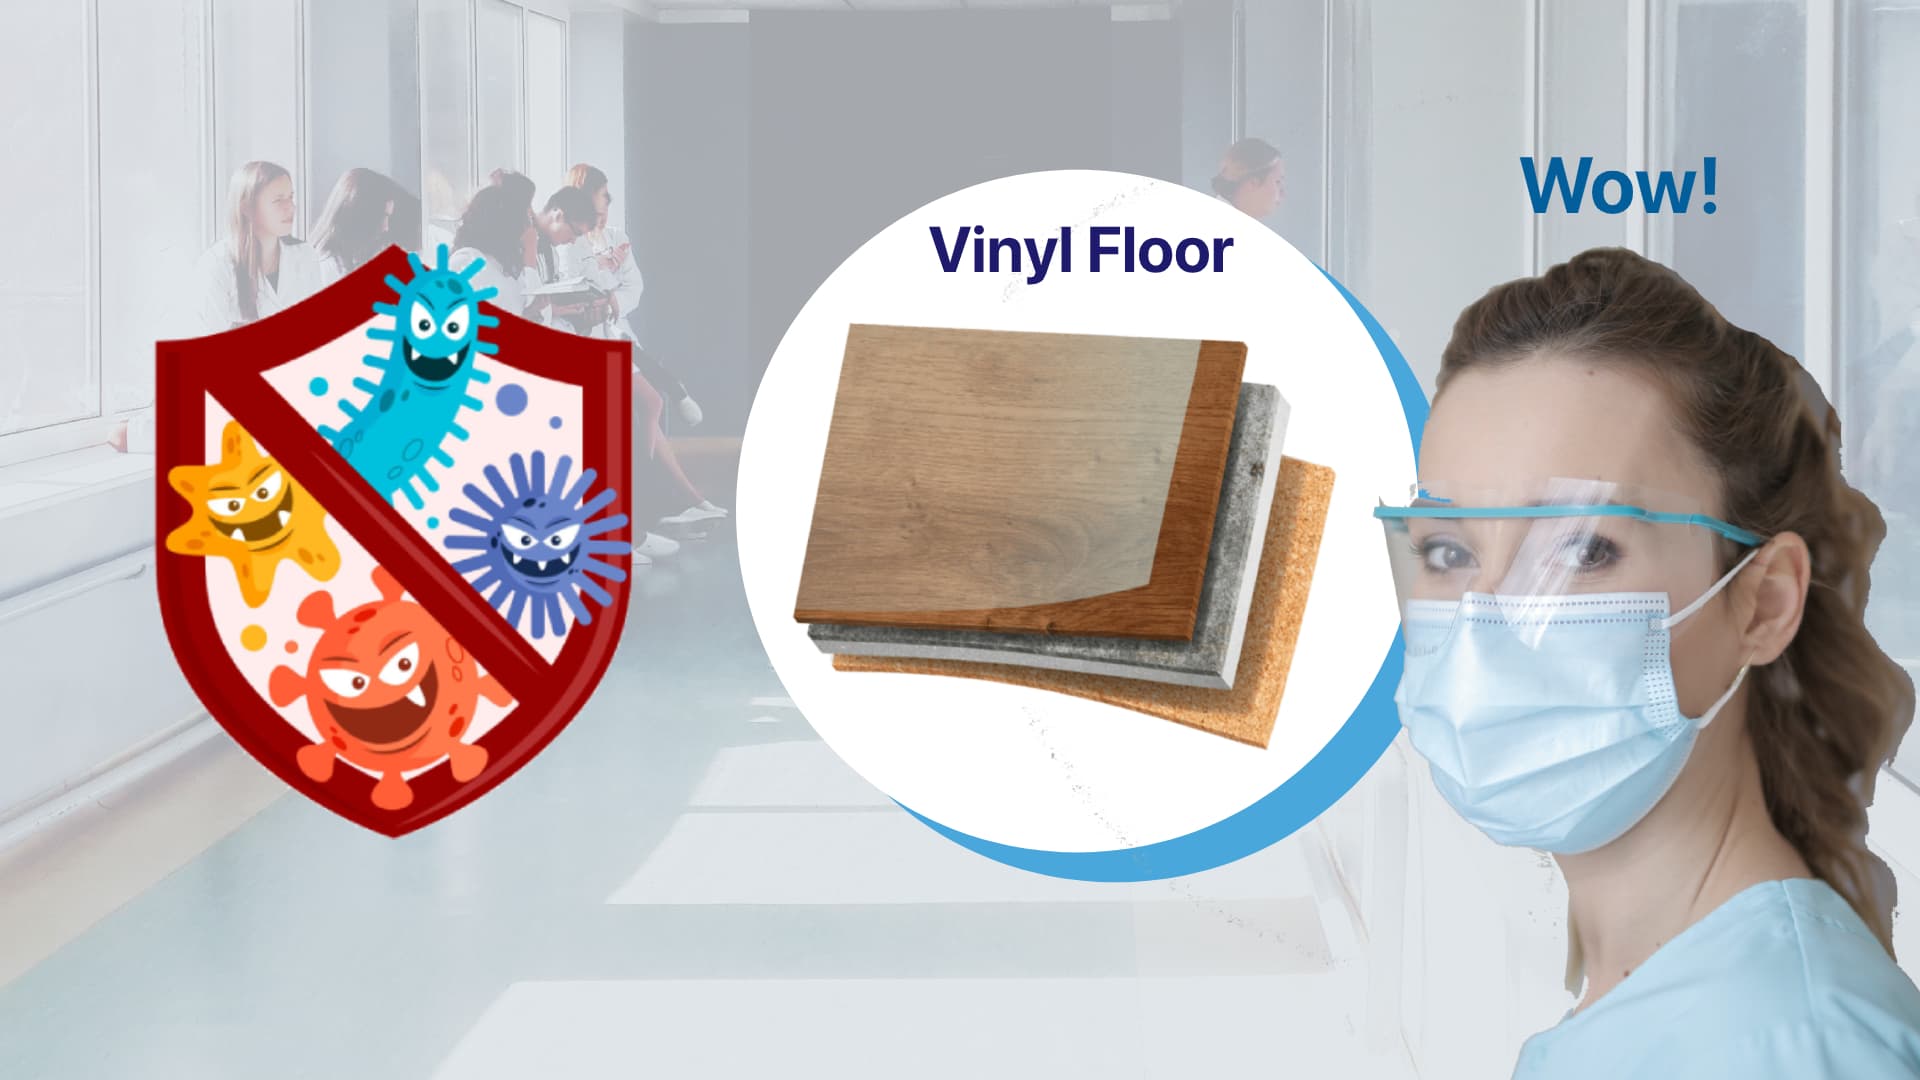 ZMARTBUILD Vinyl Floor for hospital use